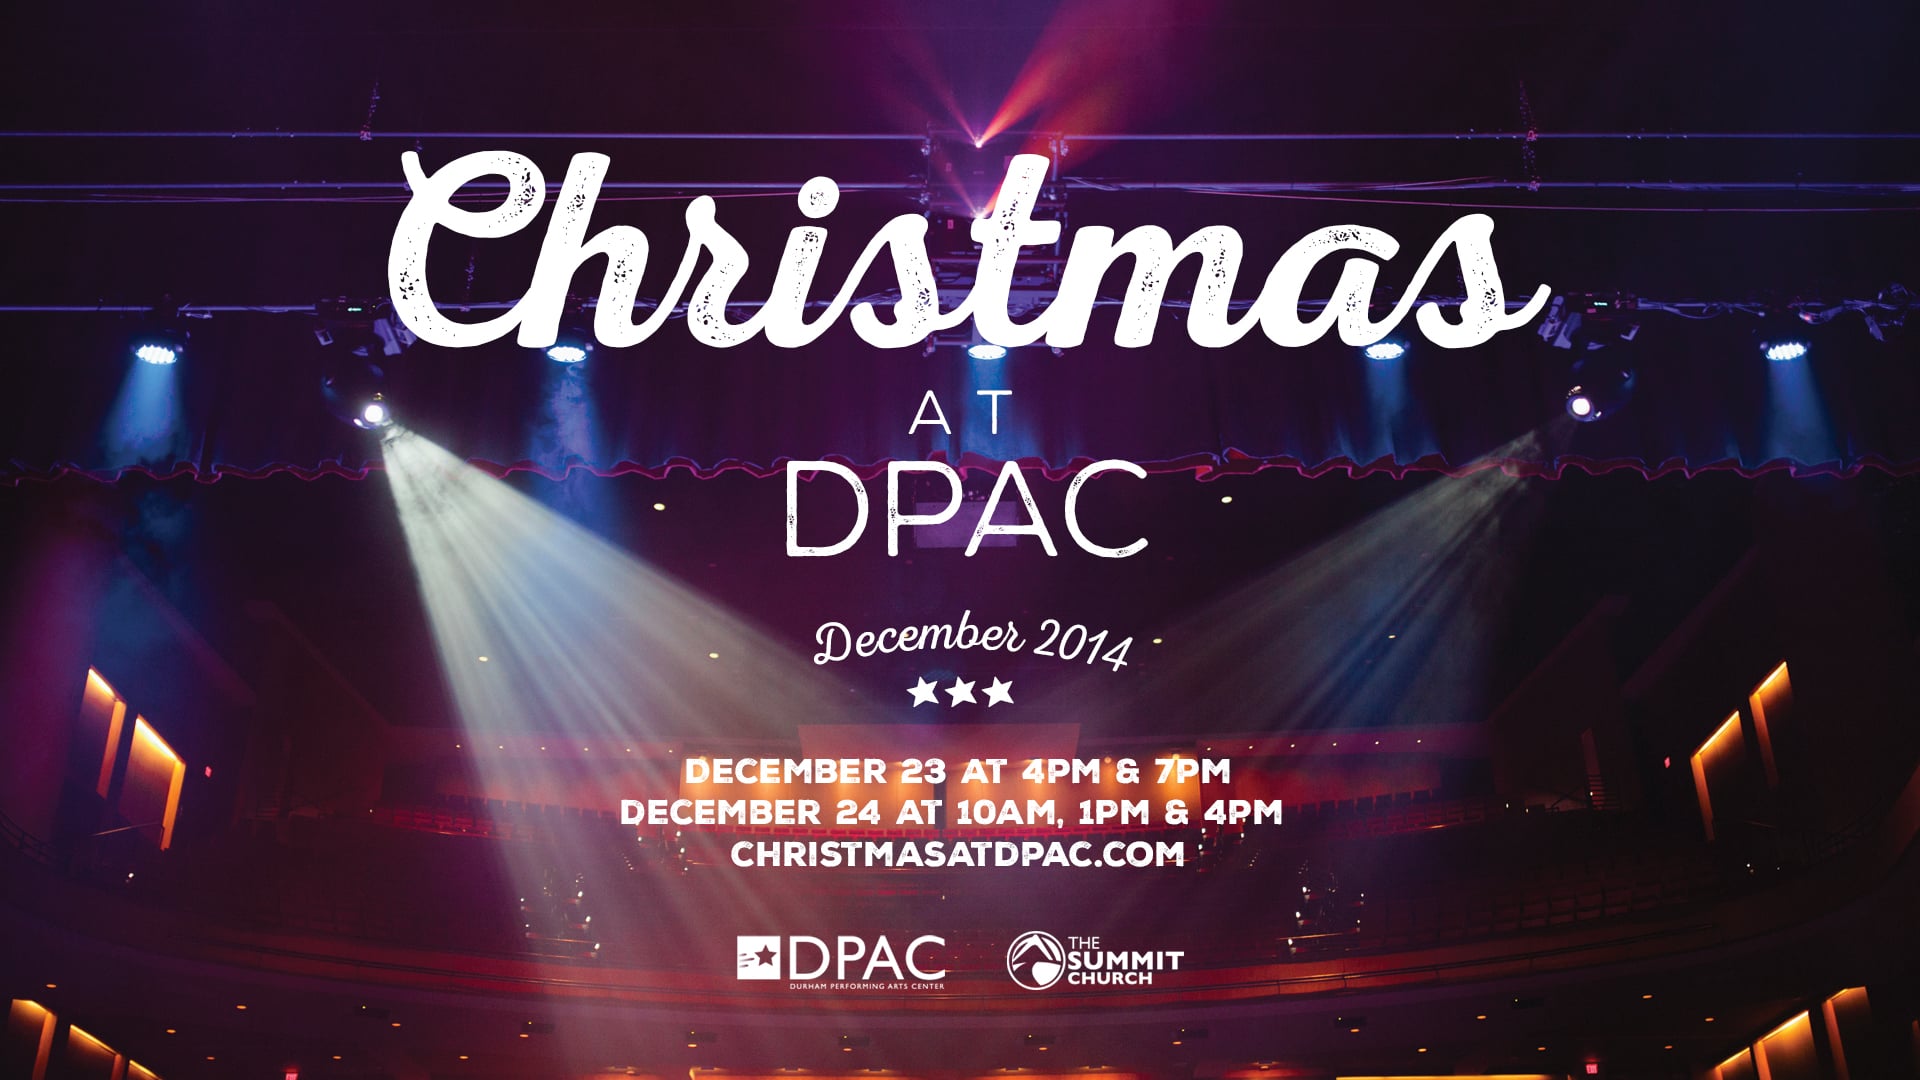 Christmas at DPAC Matthew 2111 The Summit Church